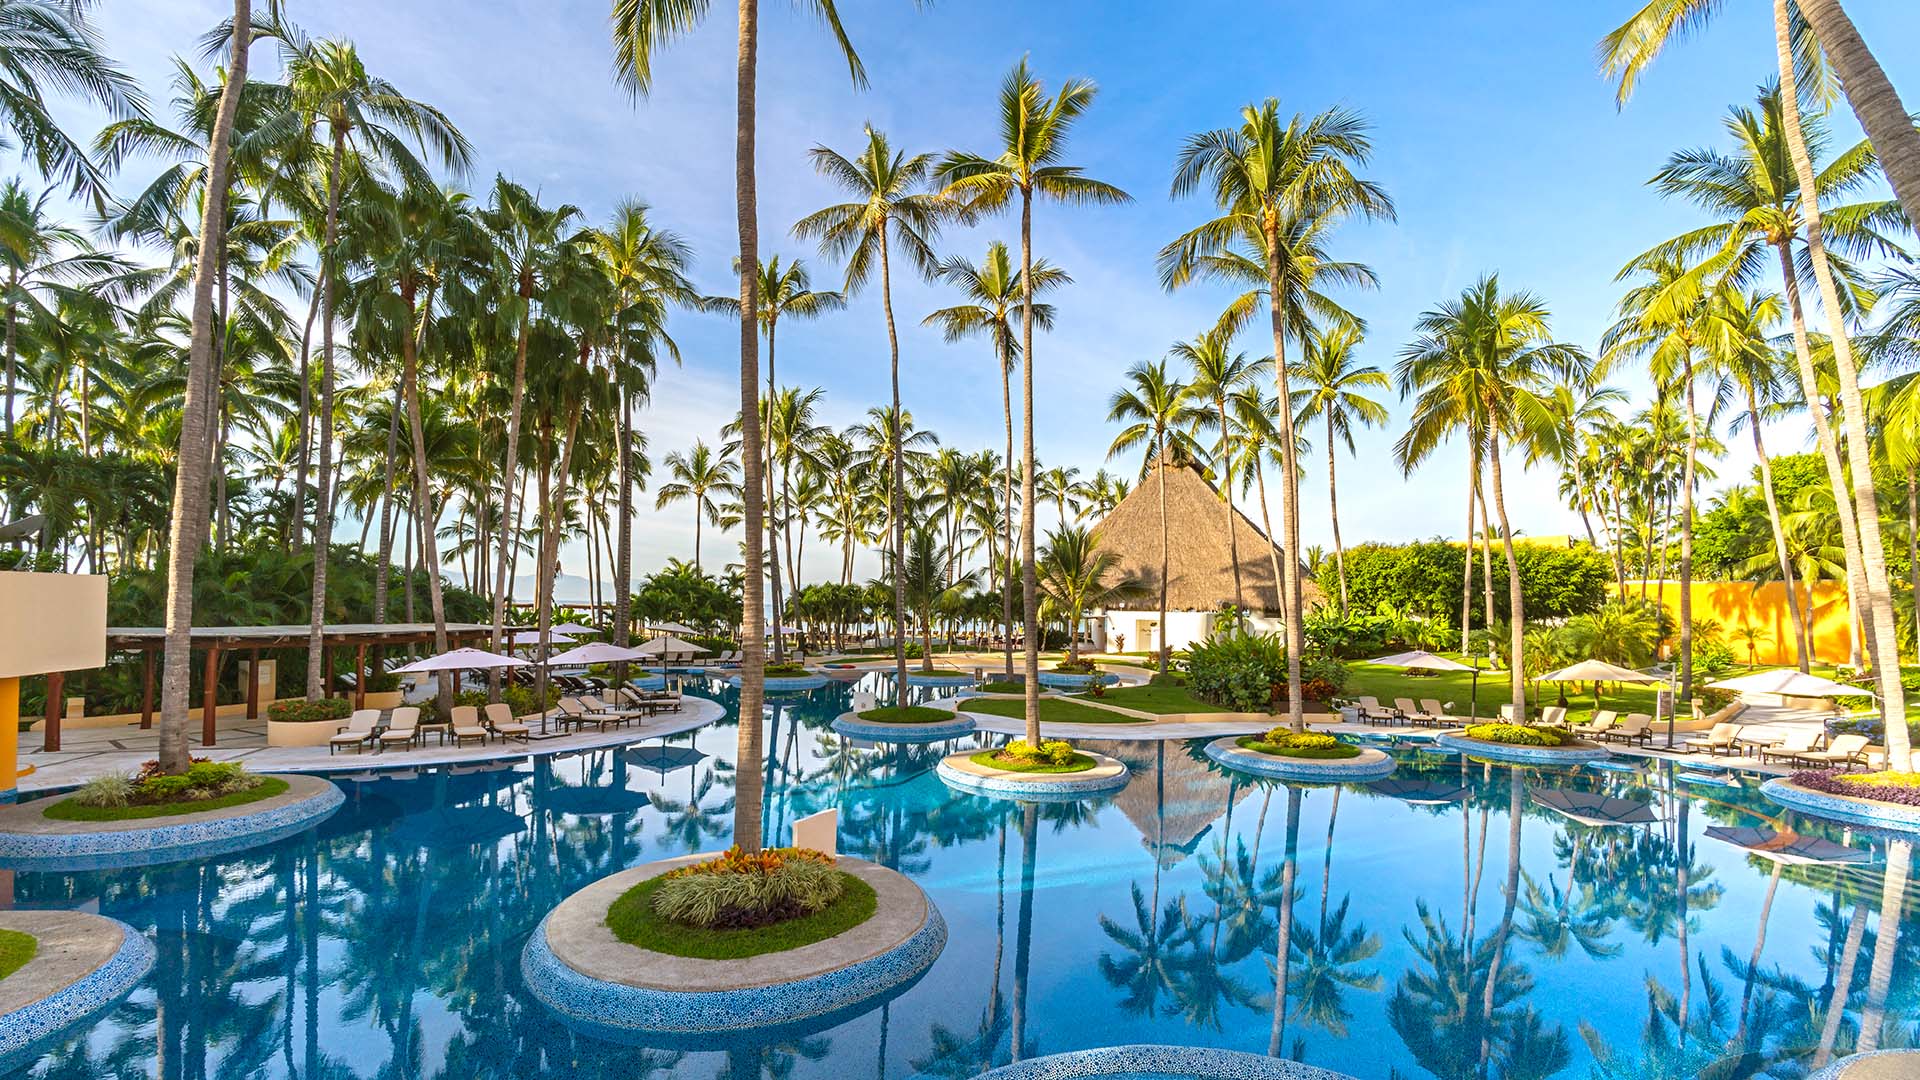 The Westin Resort & Spa Puerto Vallarta pool and palm trees